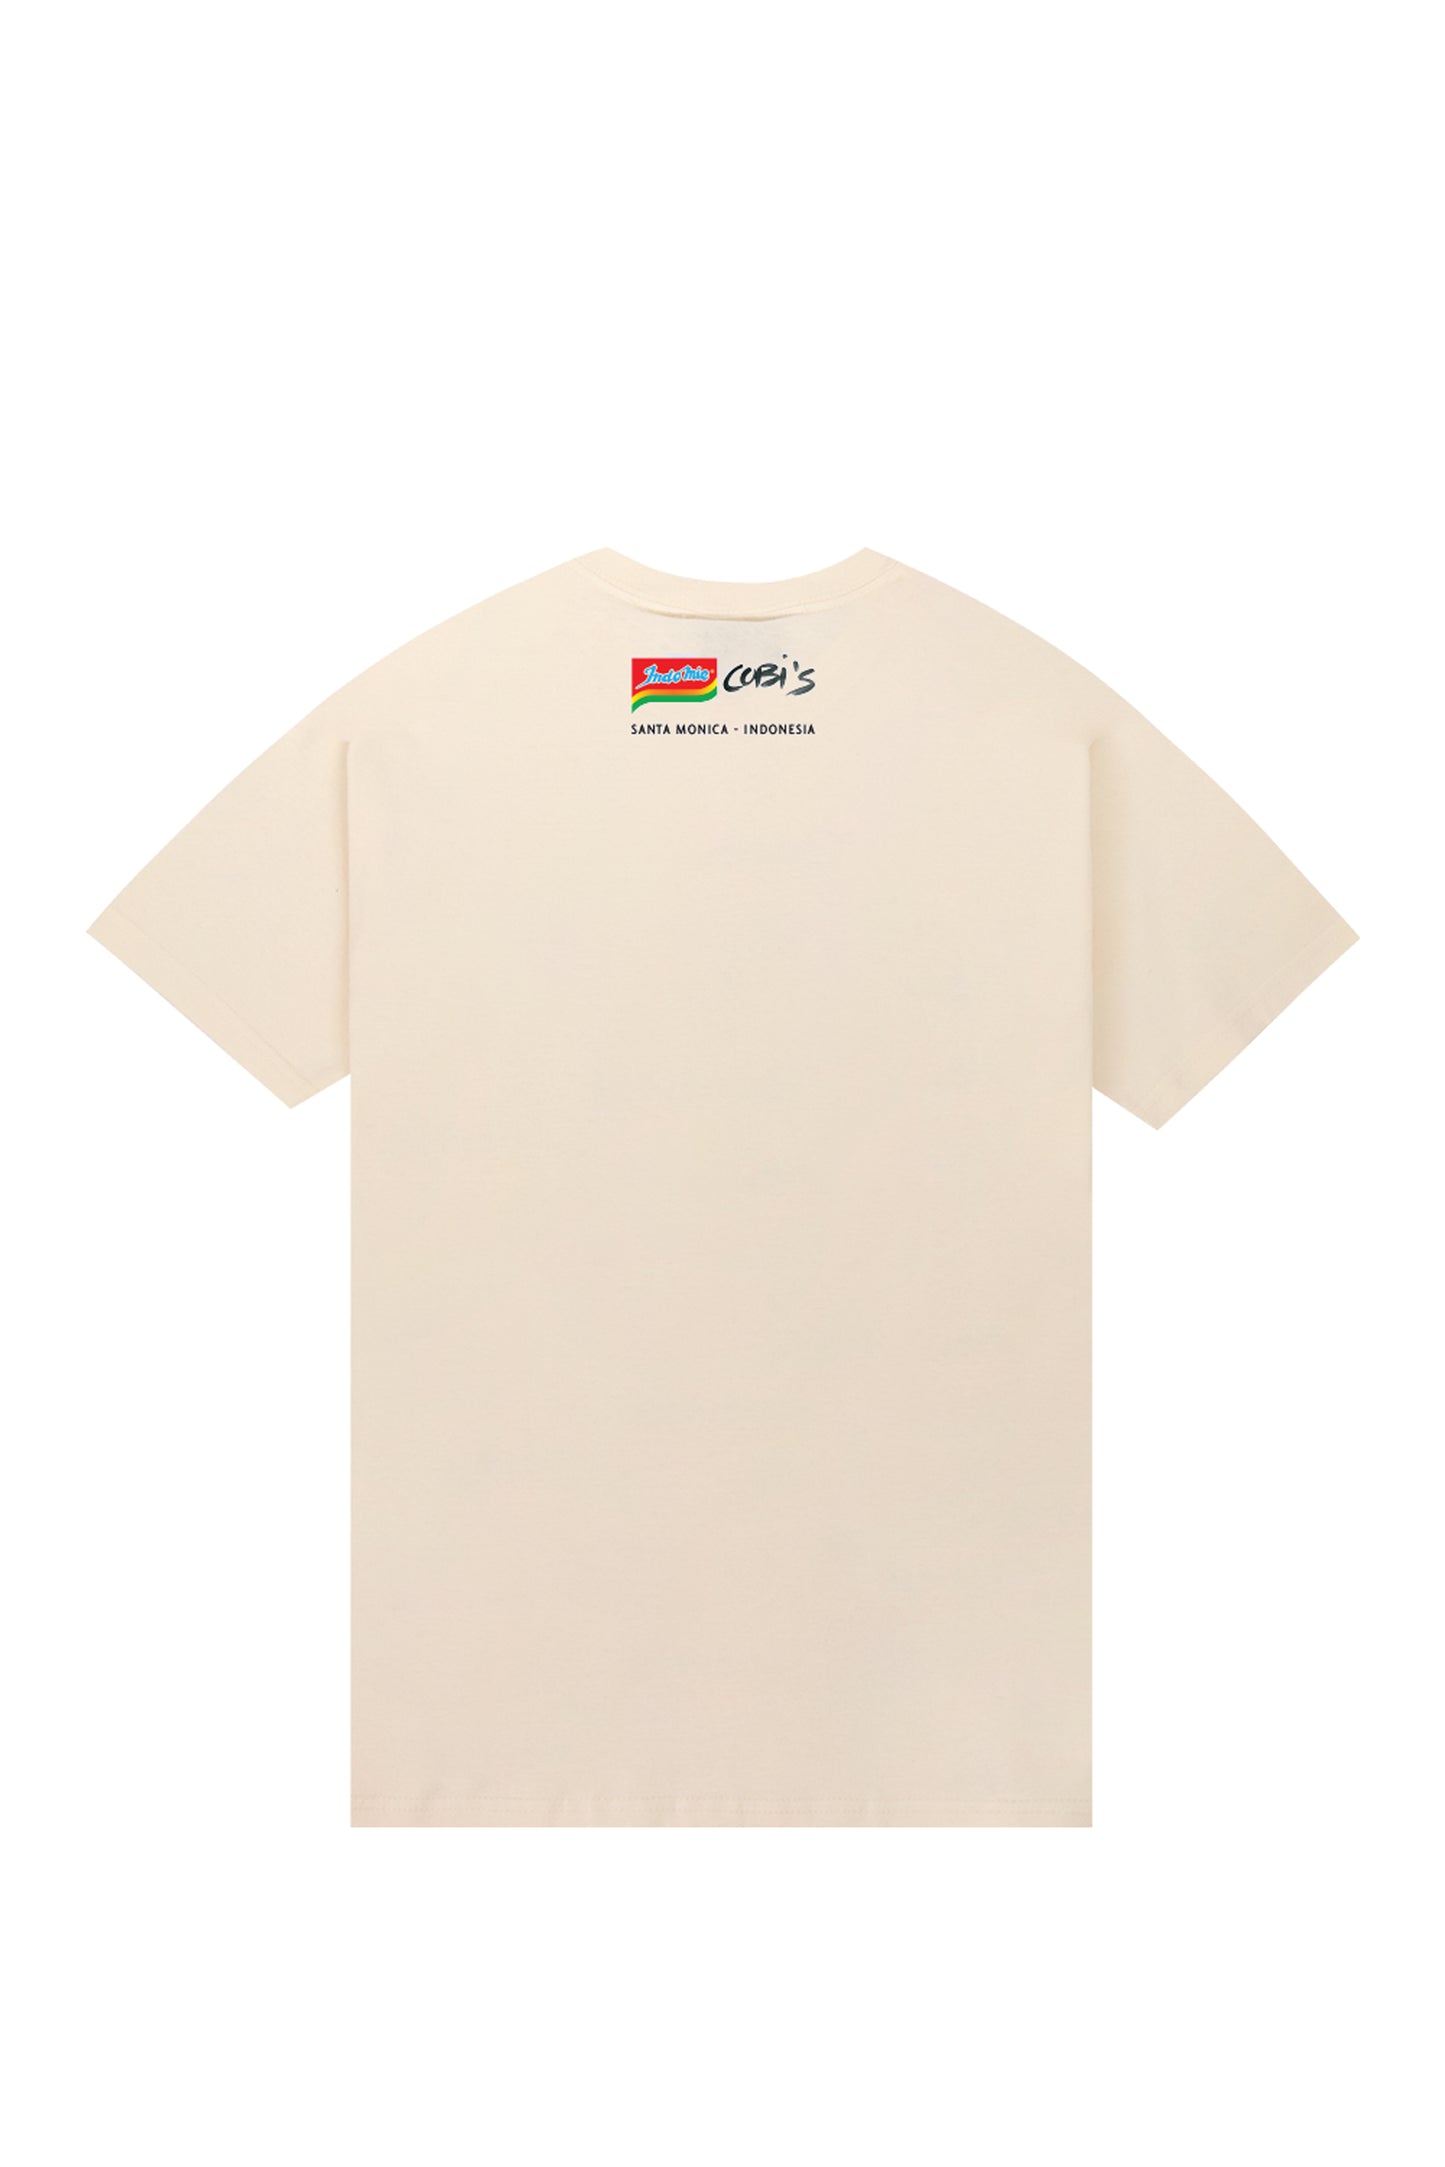 Indomie X Cobi's T-Shirt